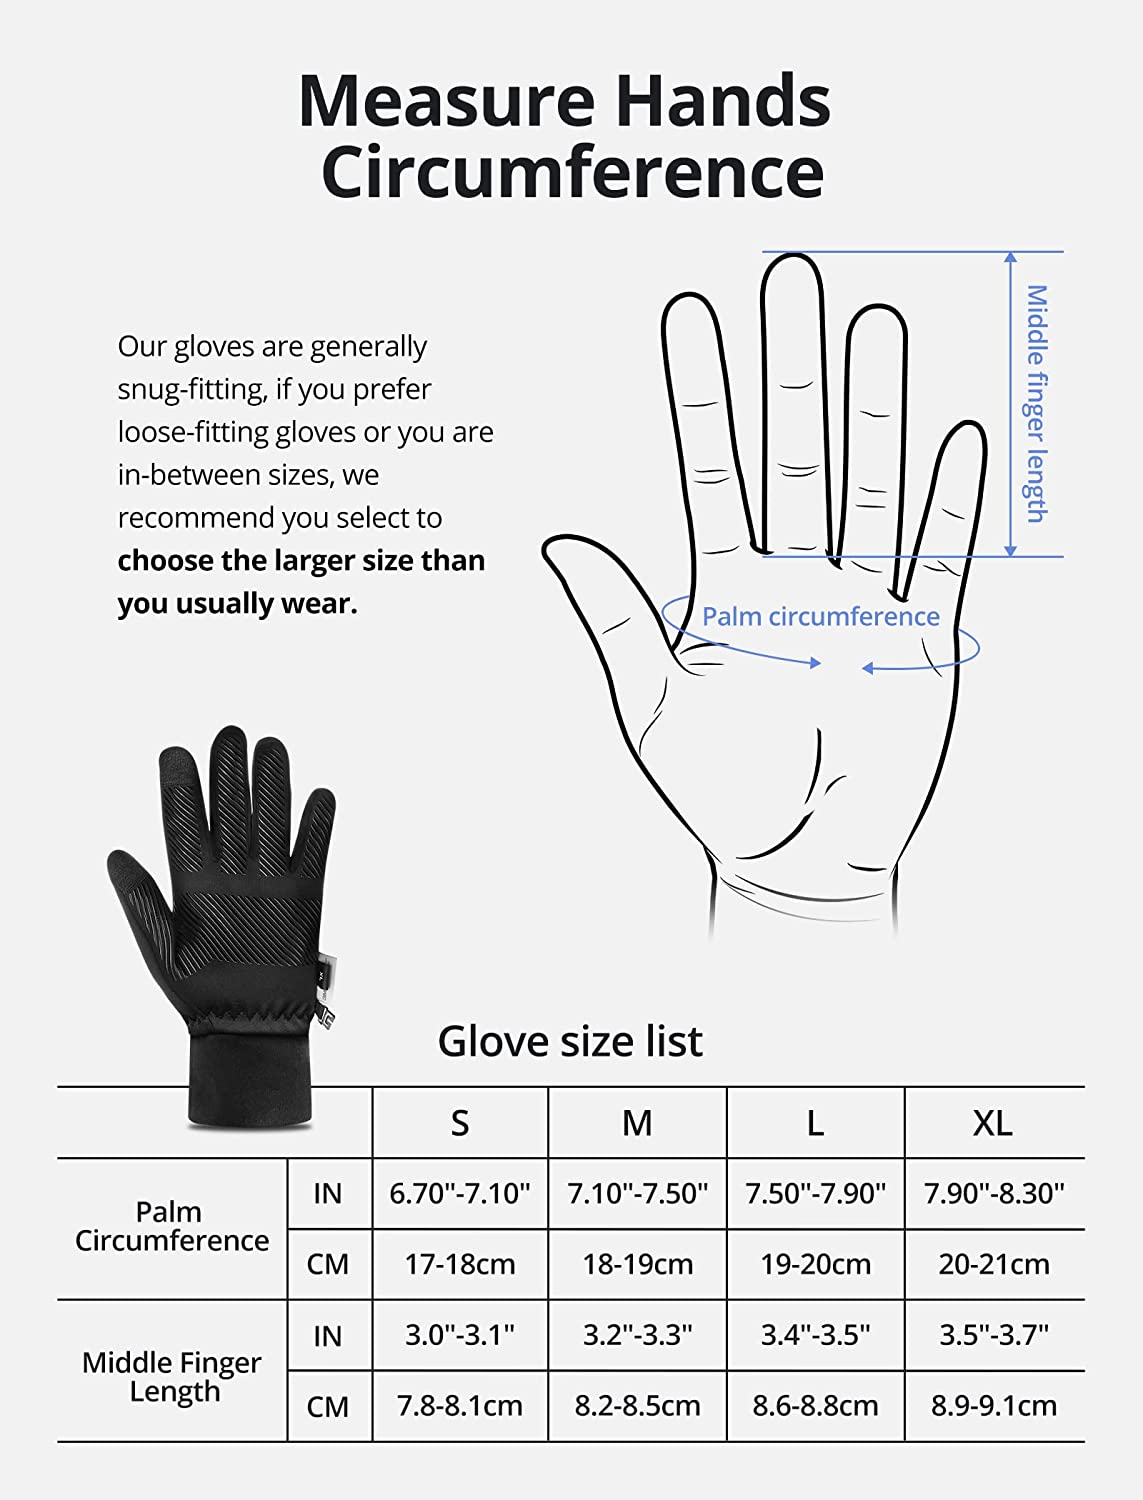 Full Finger Cycling Gloves - akasooutdoors